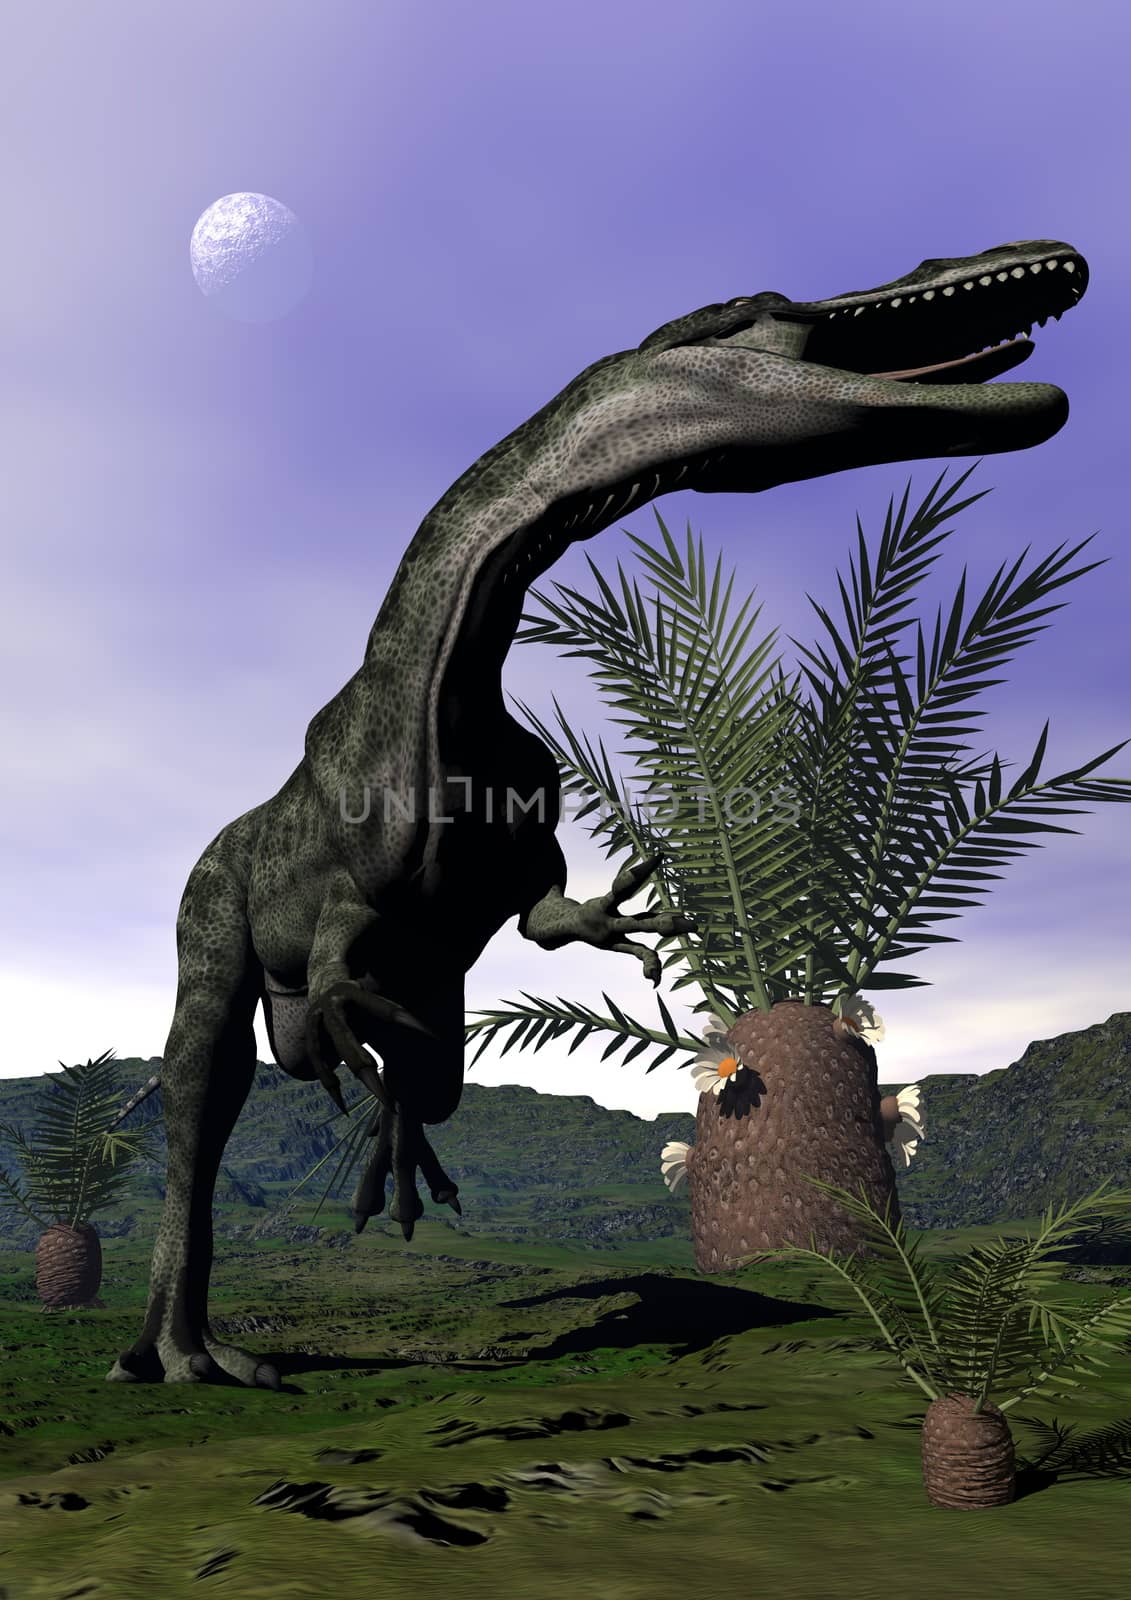 Monolophosaurus dinosaur roaring next to cycadeoidea plant by full moon evening - 3D render